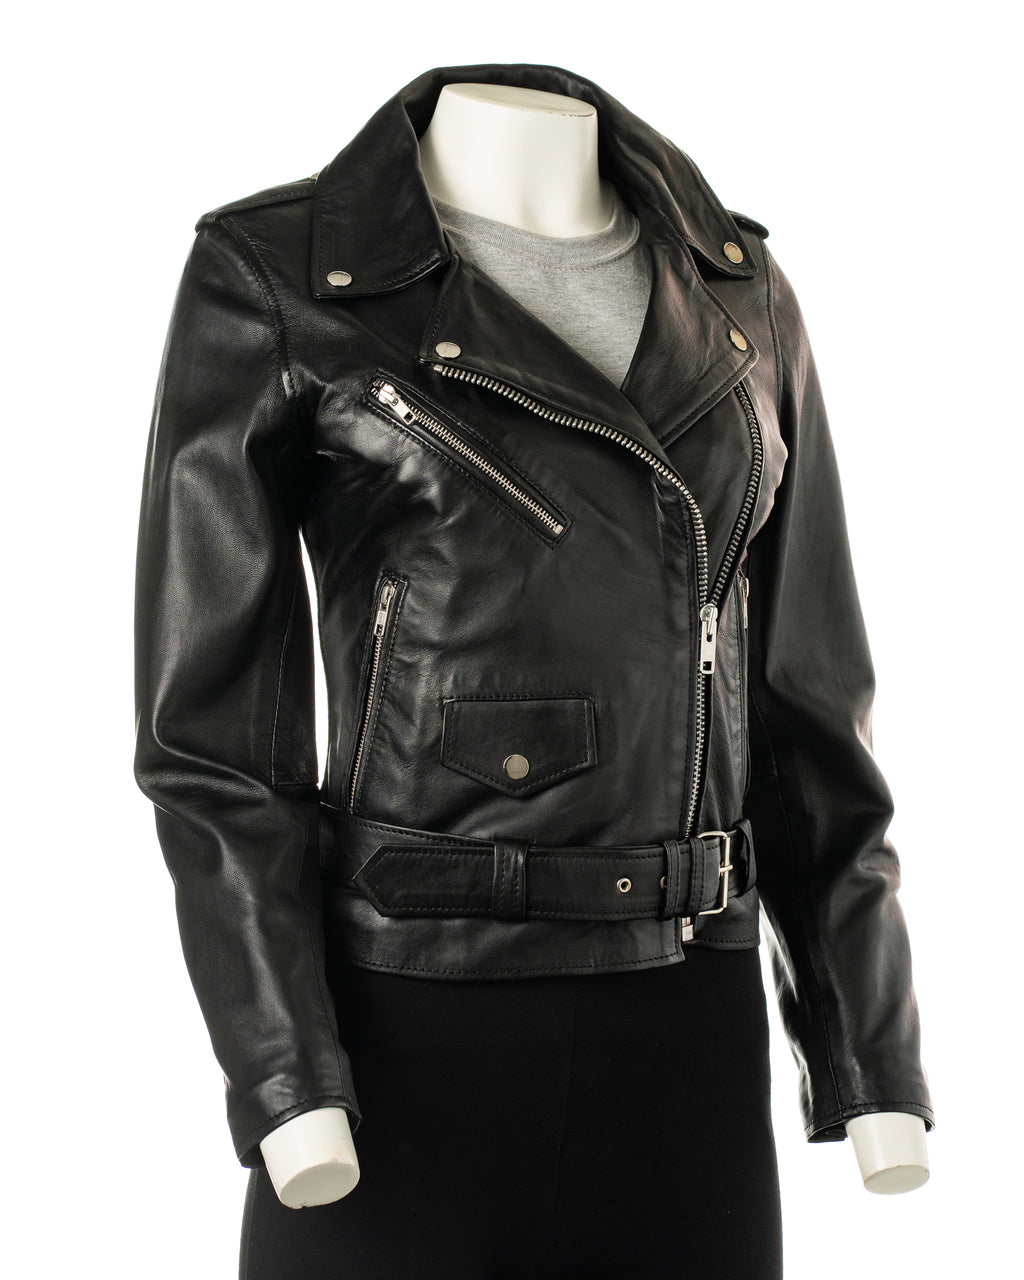 Ladies Classic Brando Style Leather Jacket: Bettina